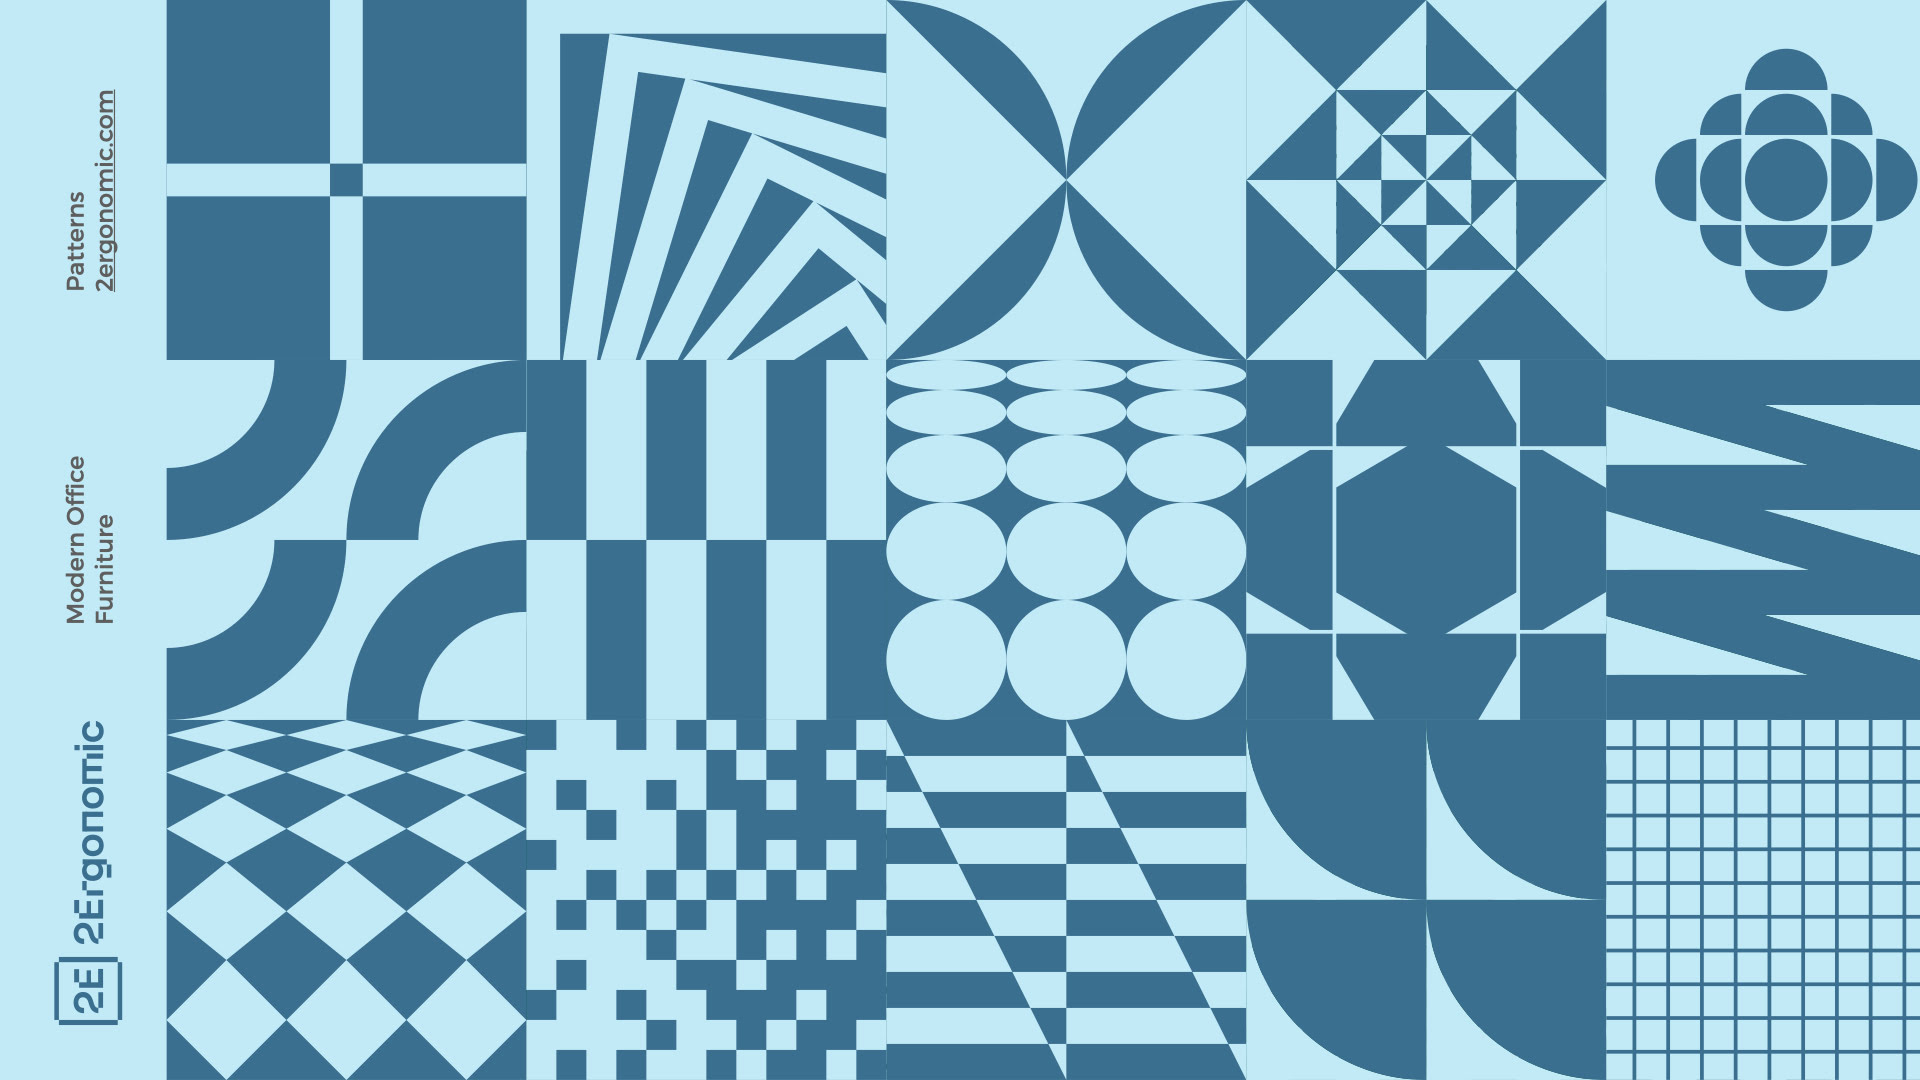 2Ergo pattern designing